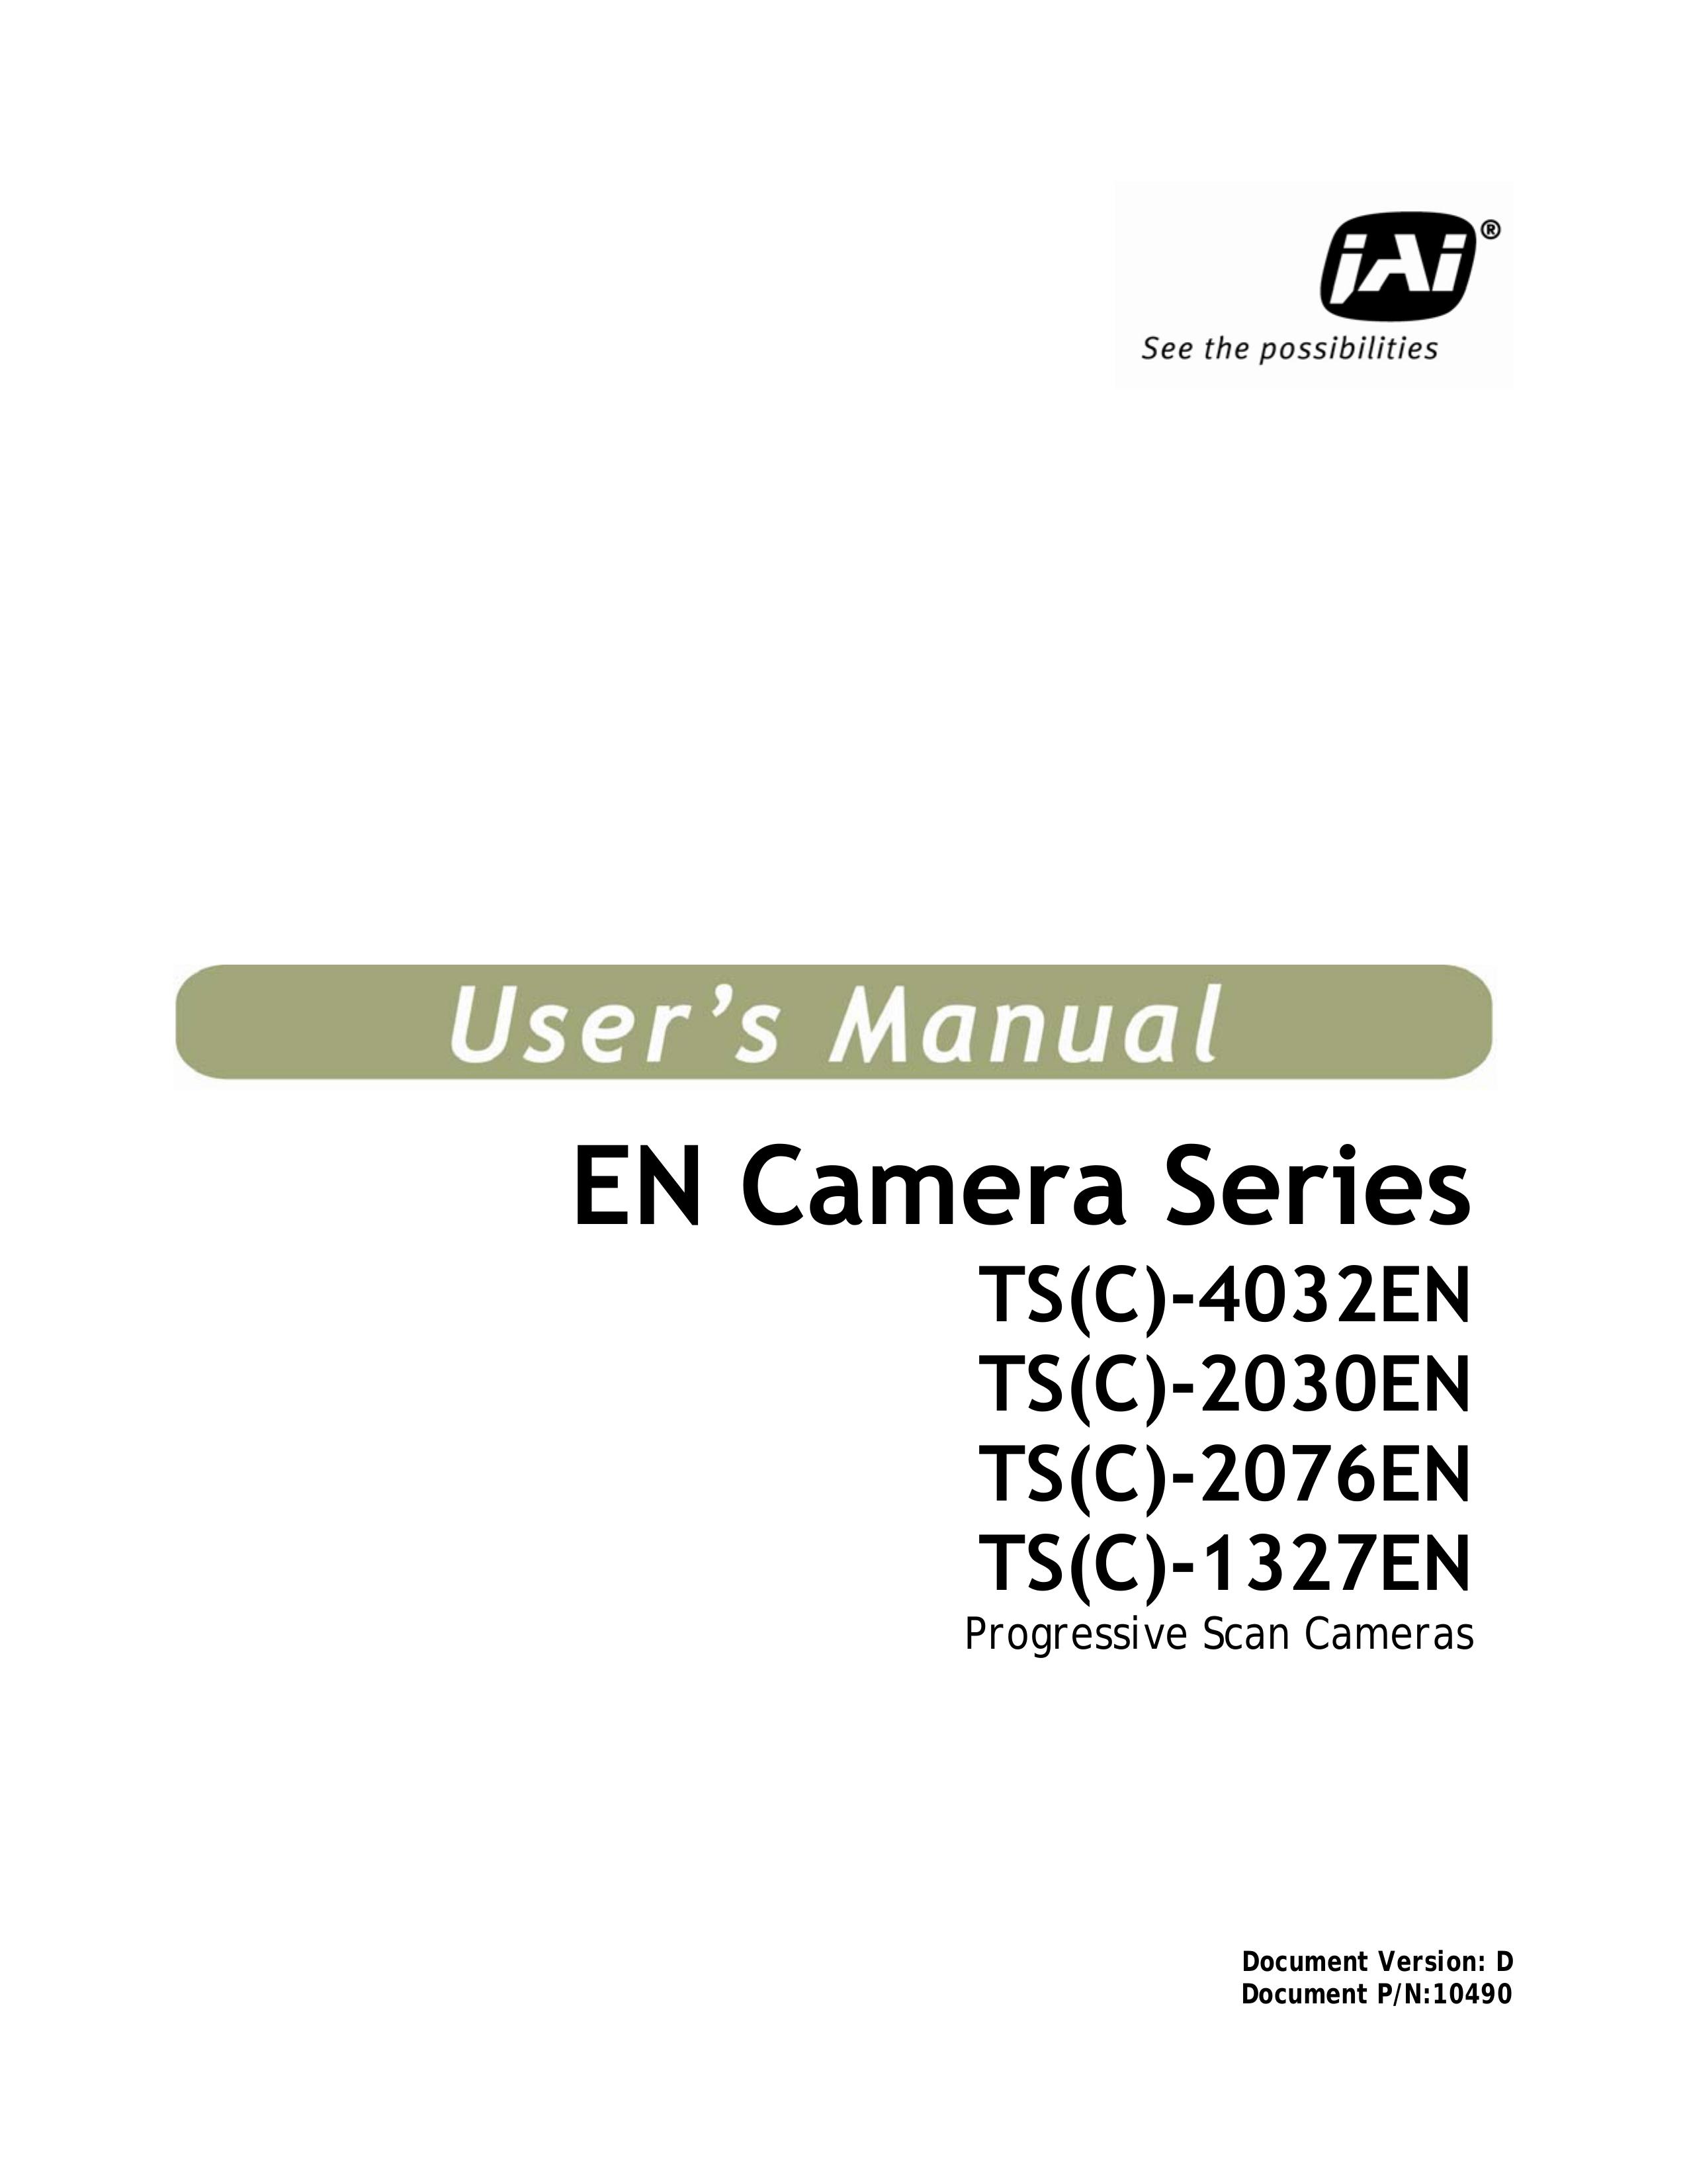 JAI TS(C)-1327EN Digital Camera User Manual